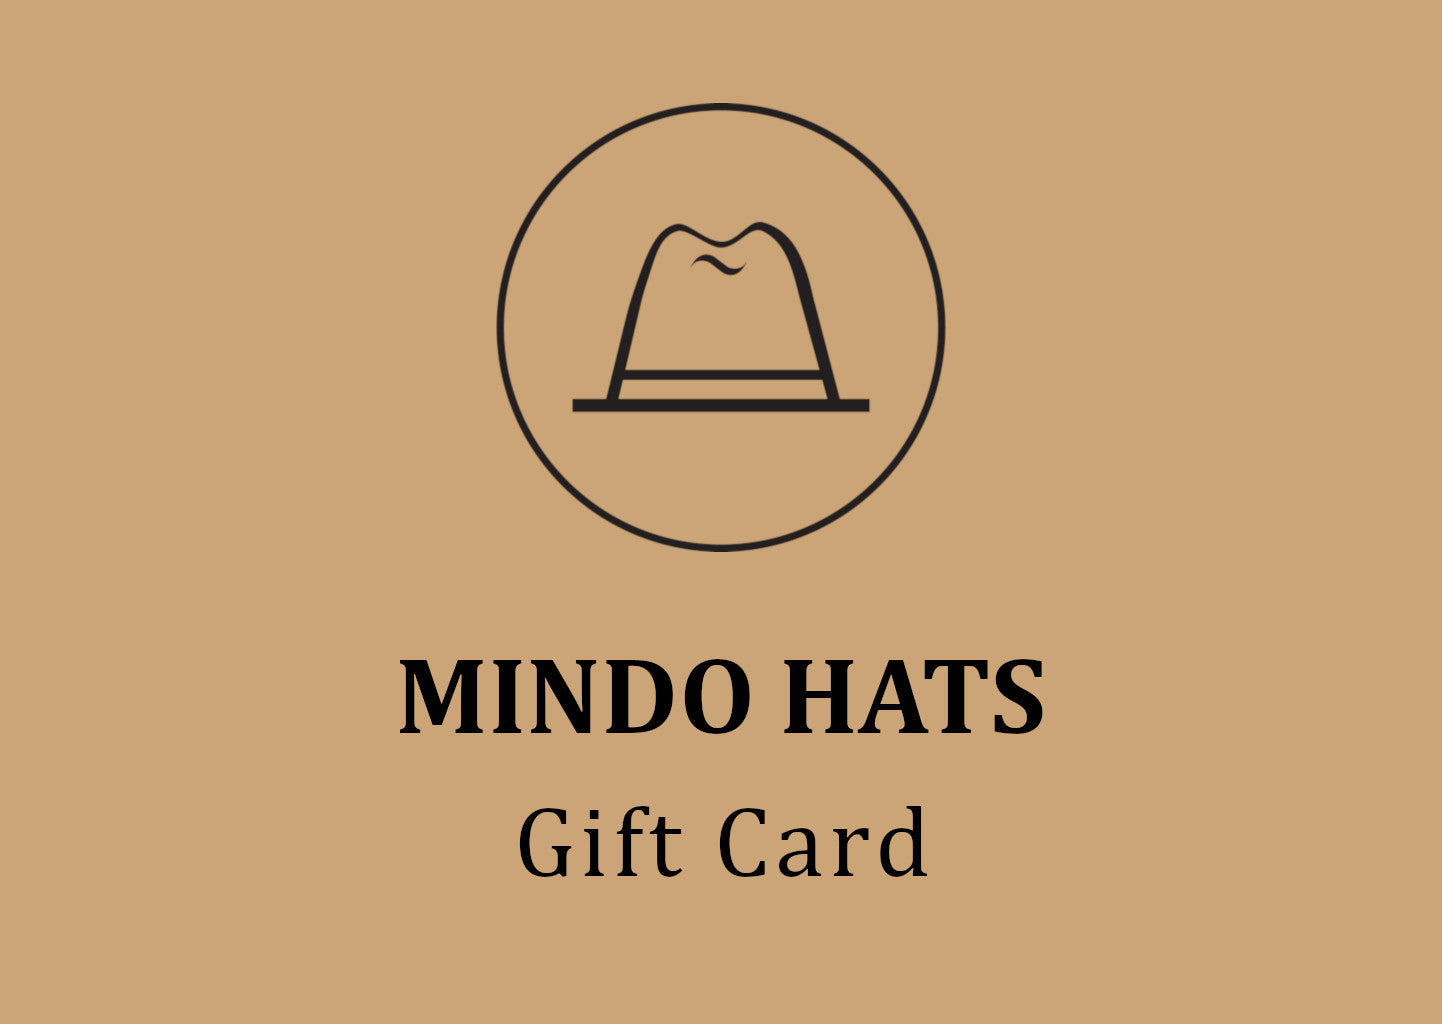 Mindohats-MINDO HATS GIFT CARD